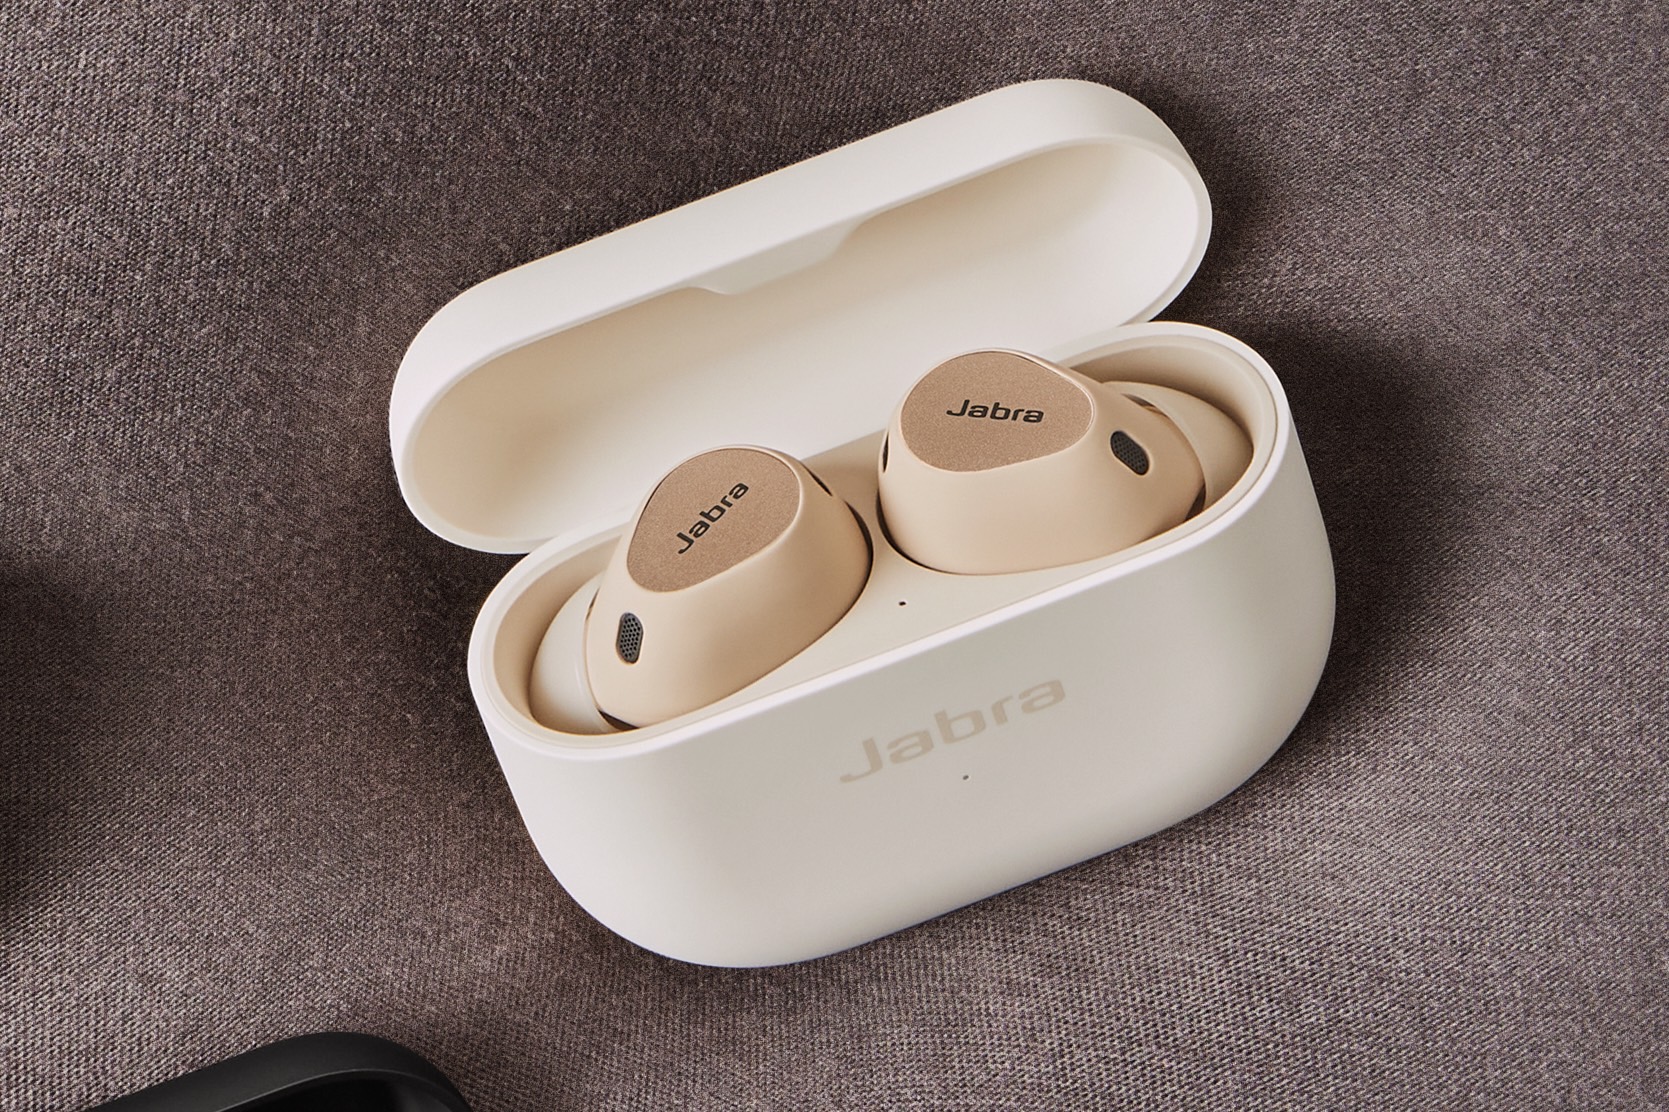 Jabra's latest wireless earbuds have Dolby spatial audio | Digital 